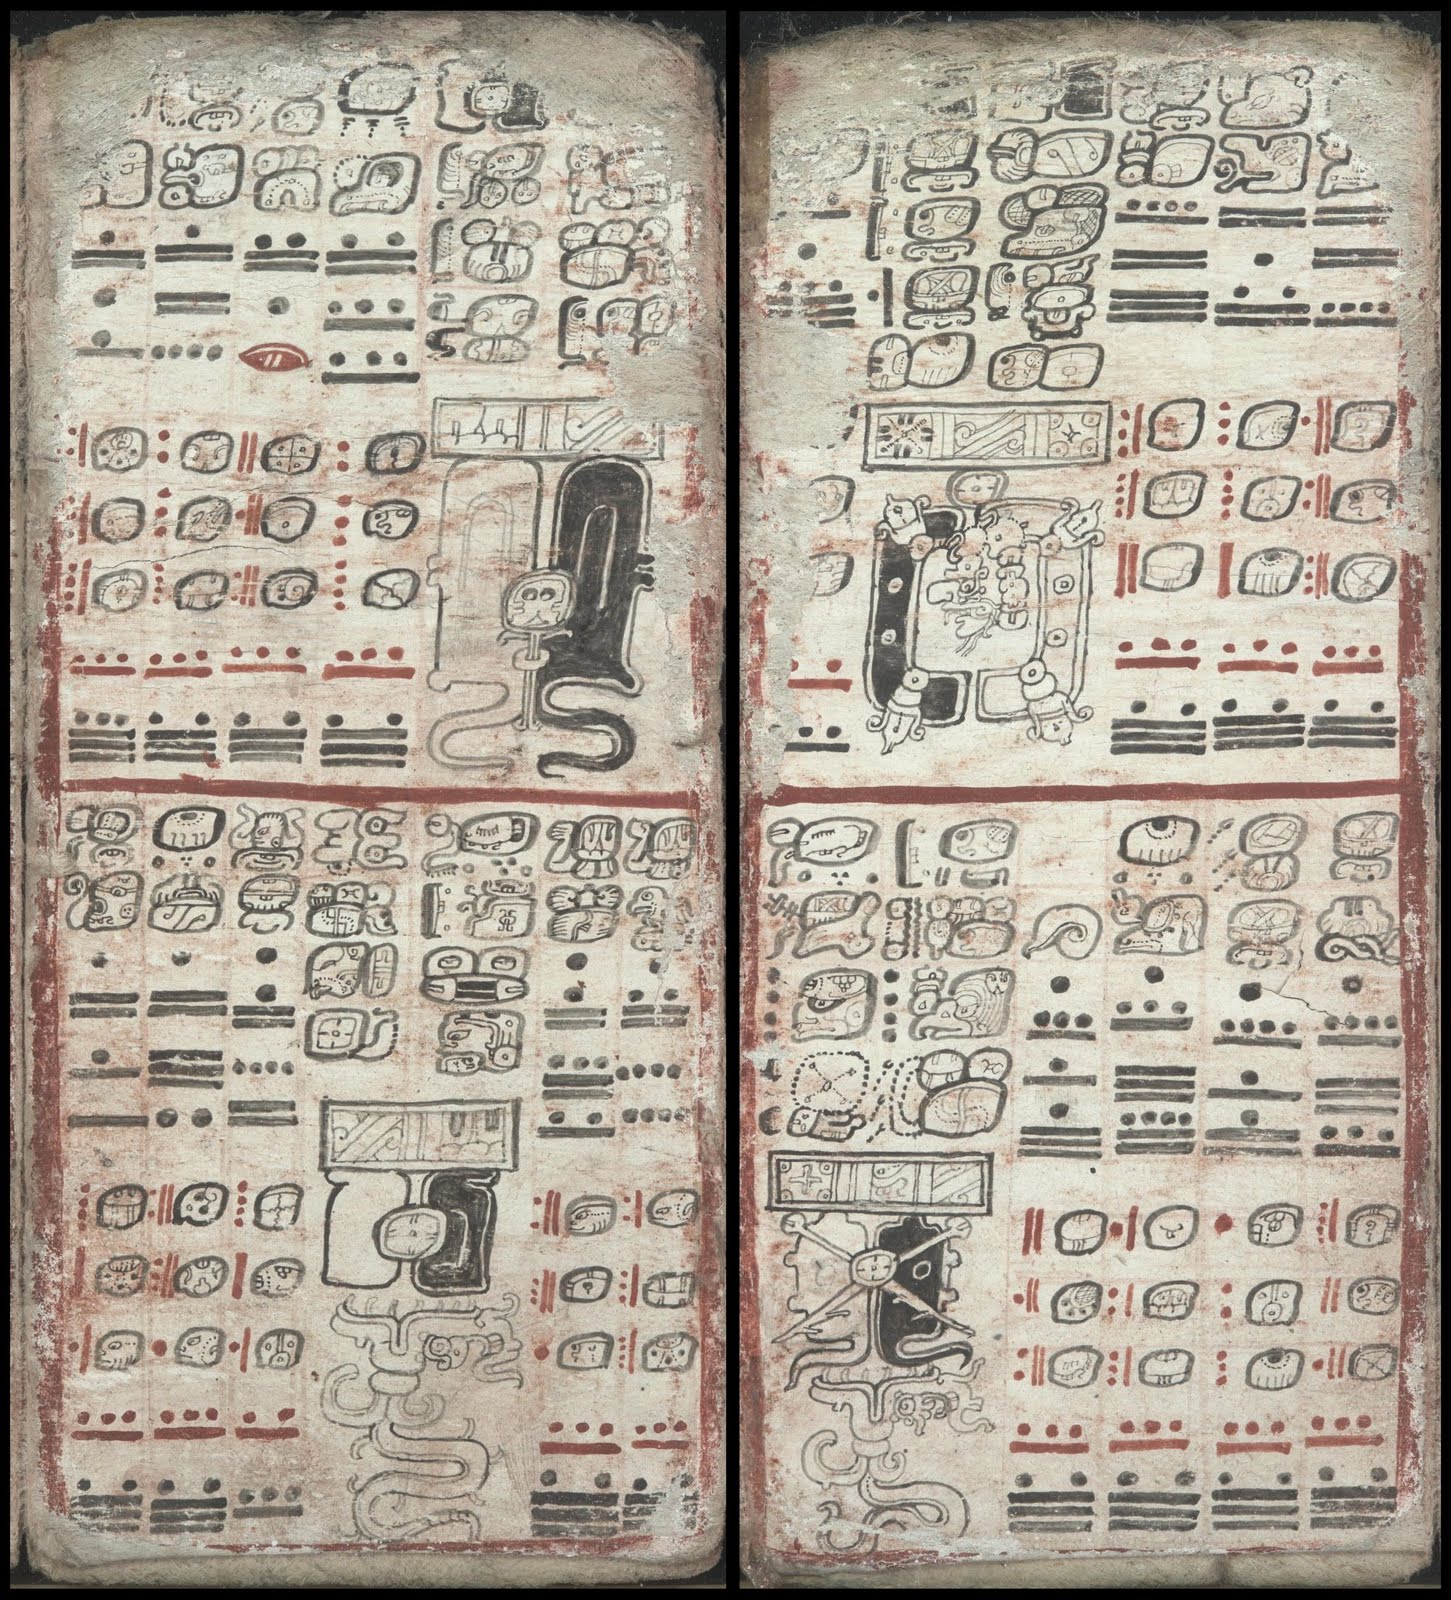 mayan codex - eclipse tables